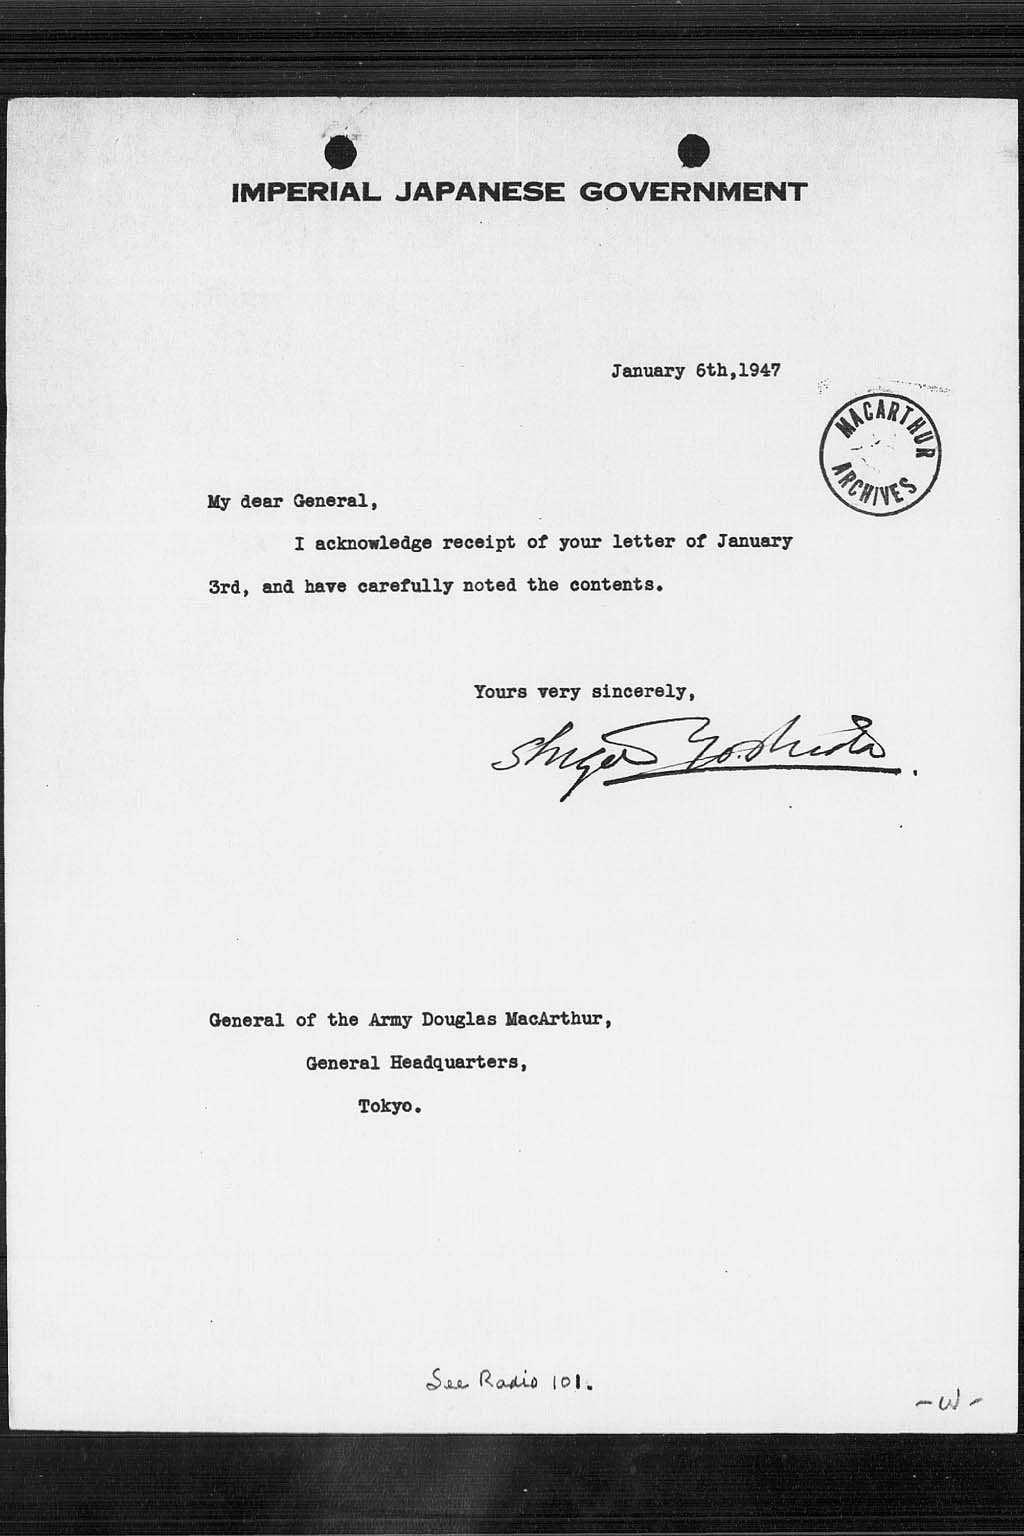 『Letter from Shigeru Yoshida to General MacArthur dated 6 January 1947』(拡大画像)